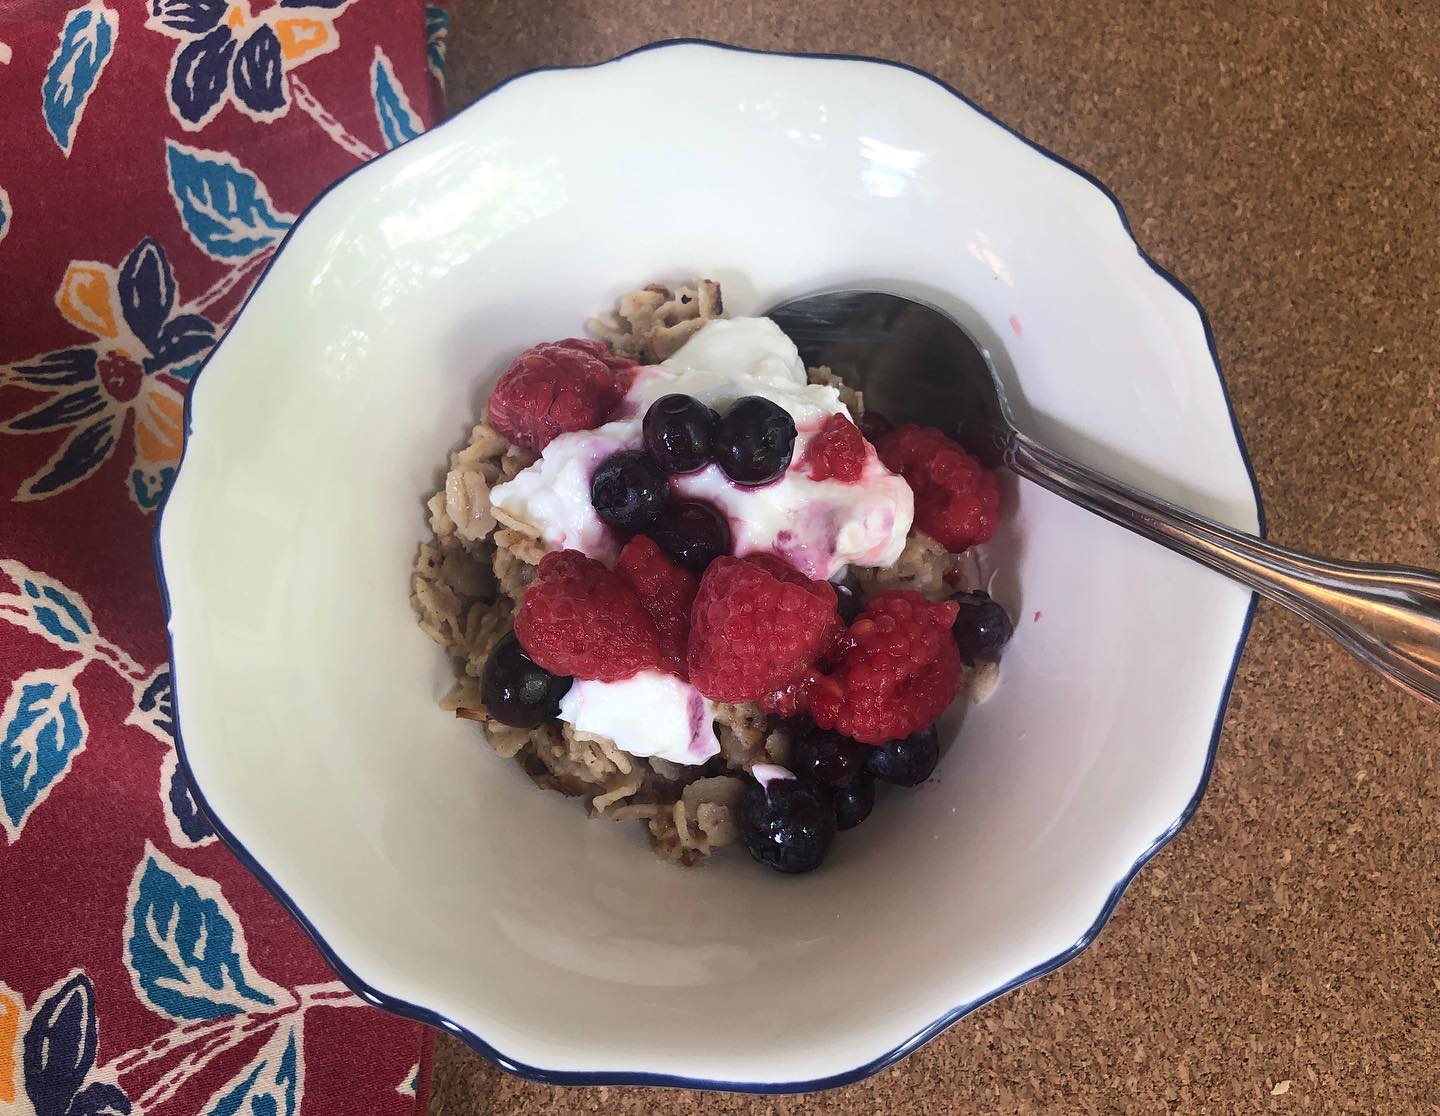 To get your day off to a good start, consider this oatmeal - the very best oatmeal - “resembling a pot of nicely steamed grains.” Recipe on the blog. Link in bio
-
-
#oatmeal #healthyfood #oatmealrecipe #martacookingbaking #wholegrain #wholegrainmornings #wholegrainmorningscookbook #breakfast #breakfastideas #zabkása #egészségestáplálkozás @meganjgordon #toastedoats #zabpehely #teljeskiőrlésű #zabpehelyrecept #healthyrecipes #healthybreakfast #egészségesreggeli #weightlossfood #healthyeating